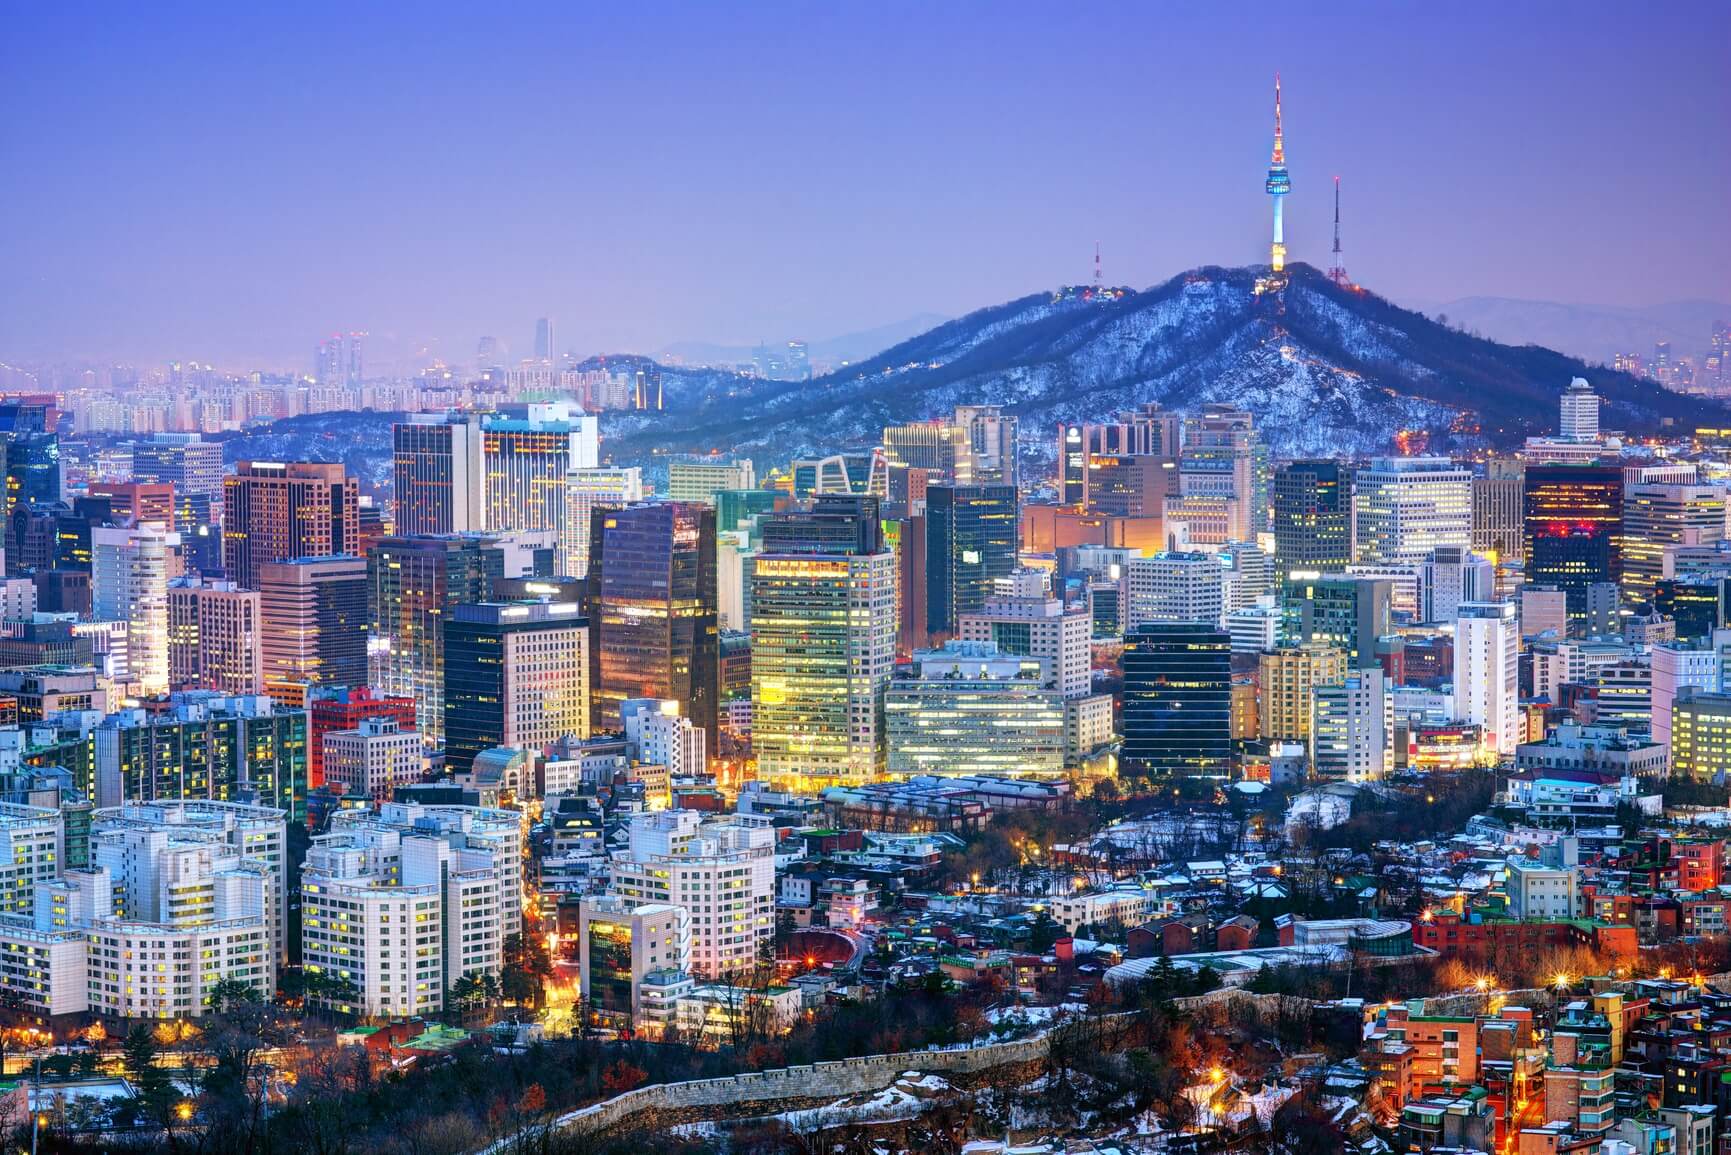 Flight deals from Amsterdam, Netherlands to Seoul, South Korea | Secret Flying